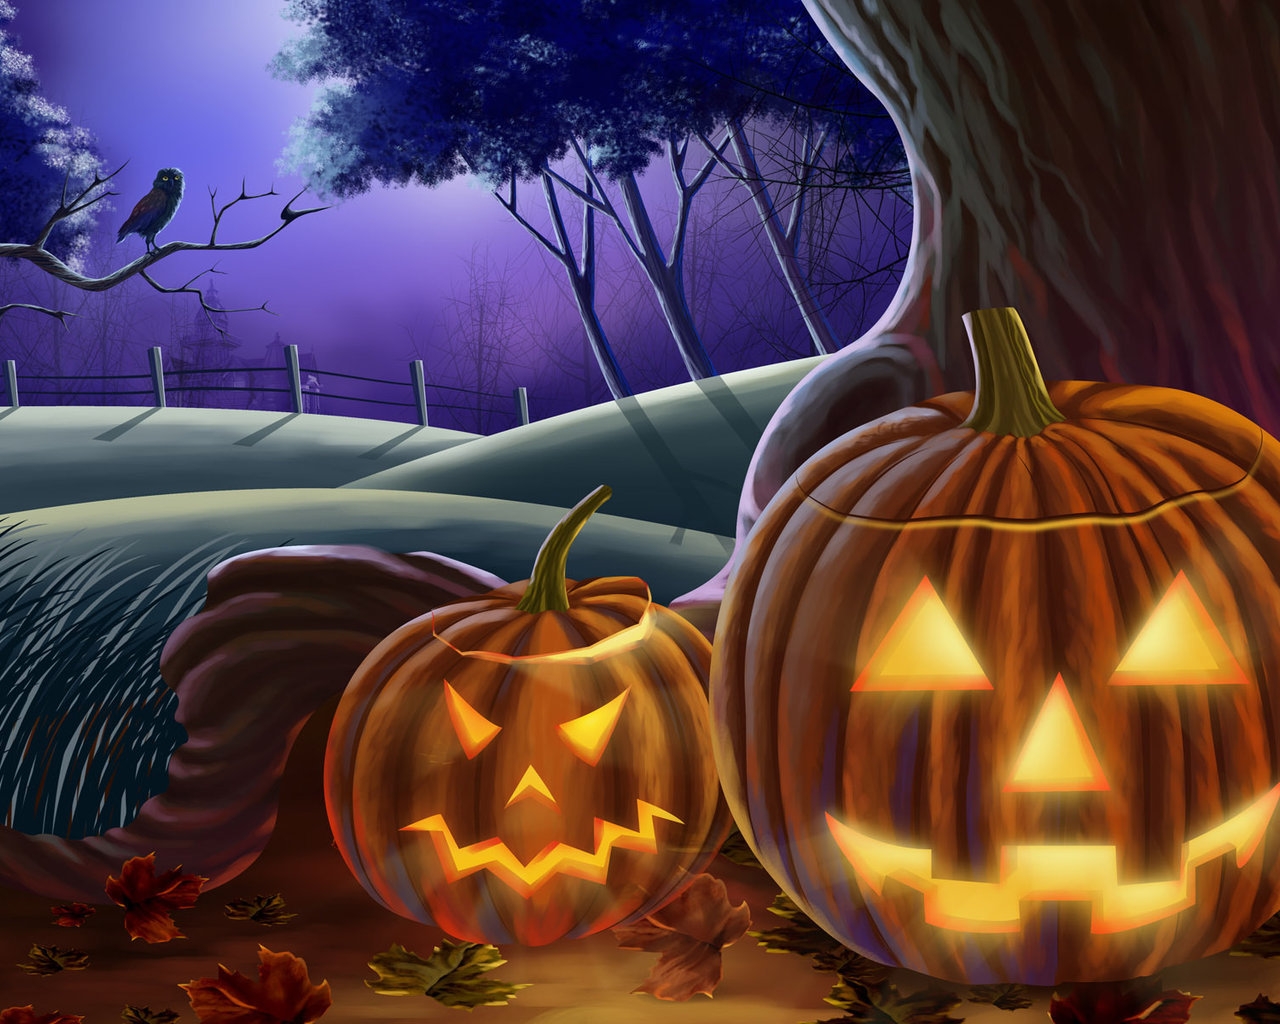 Illuminated Pumpkins for Halloween for 1280 x 1024 resolution